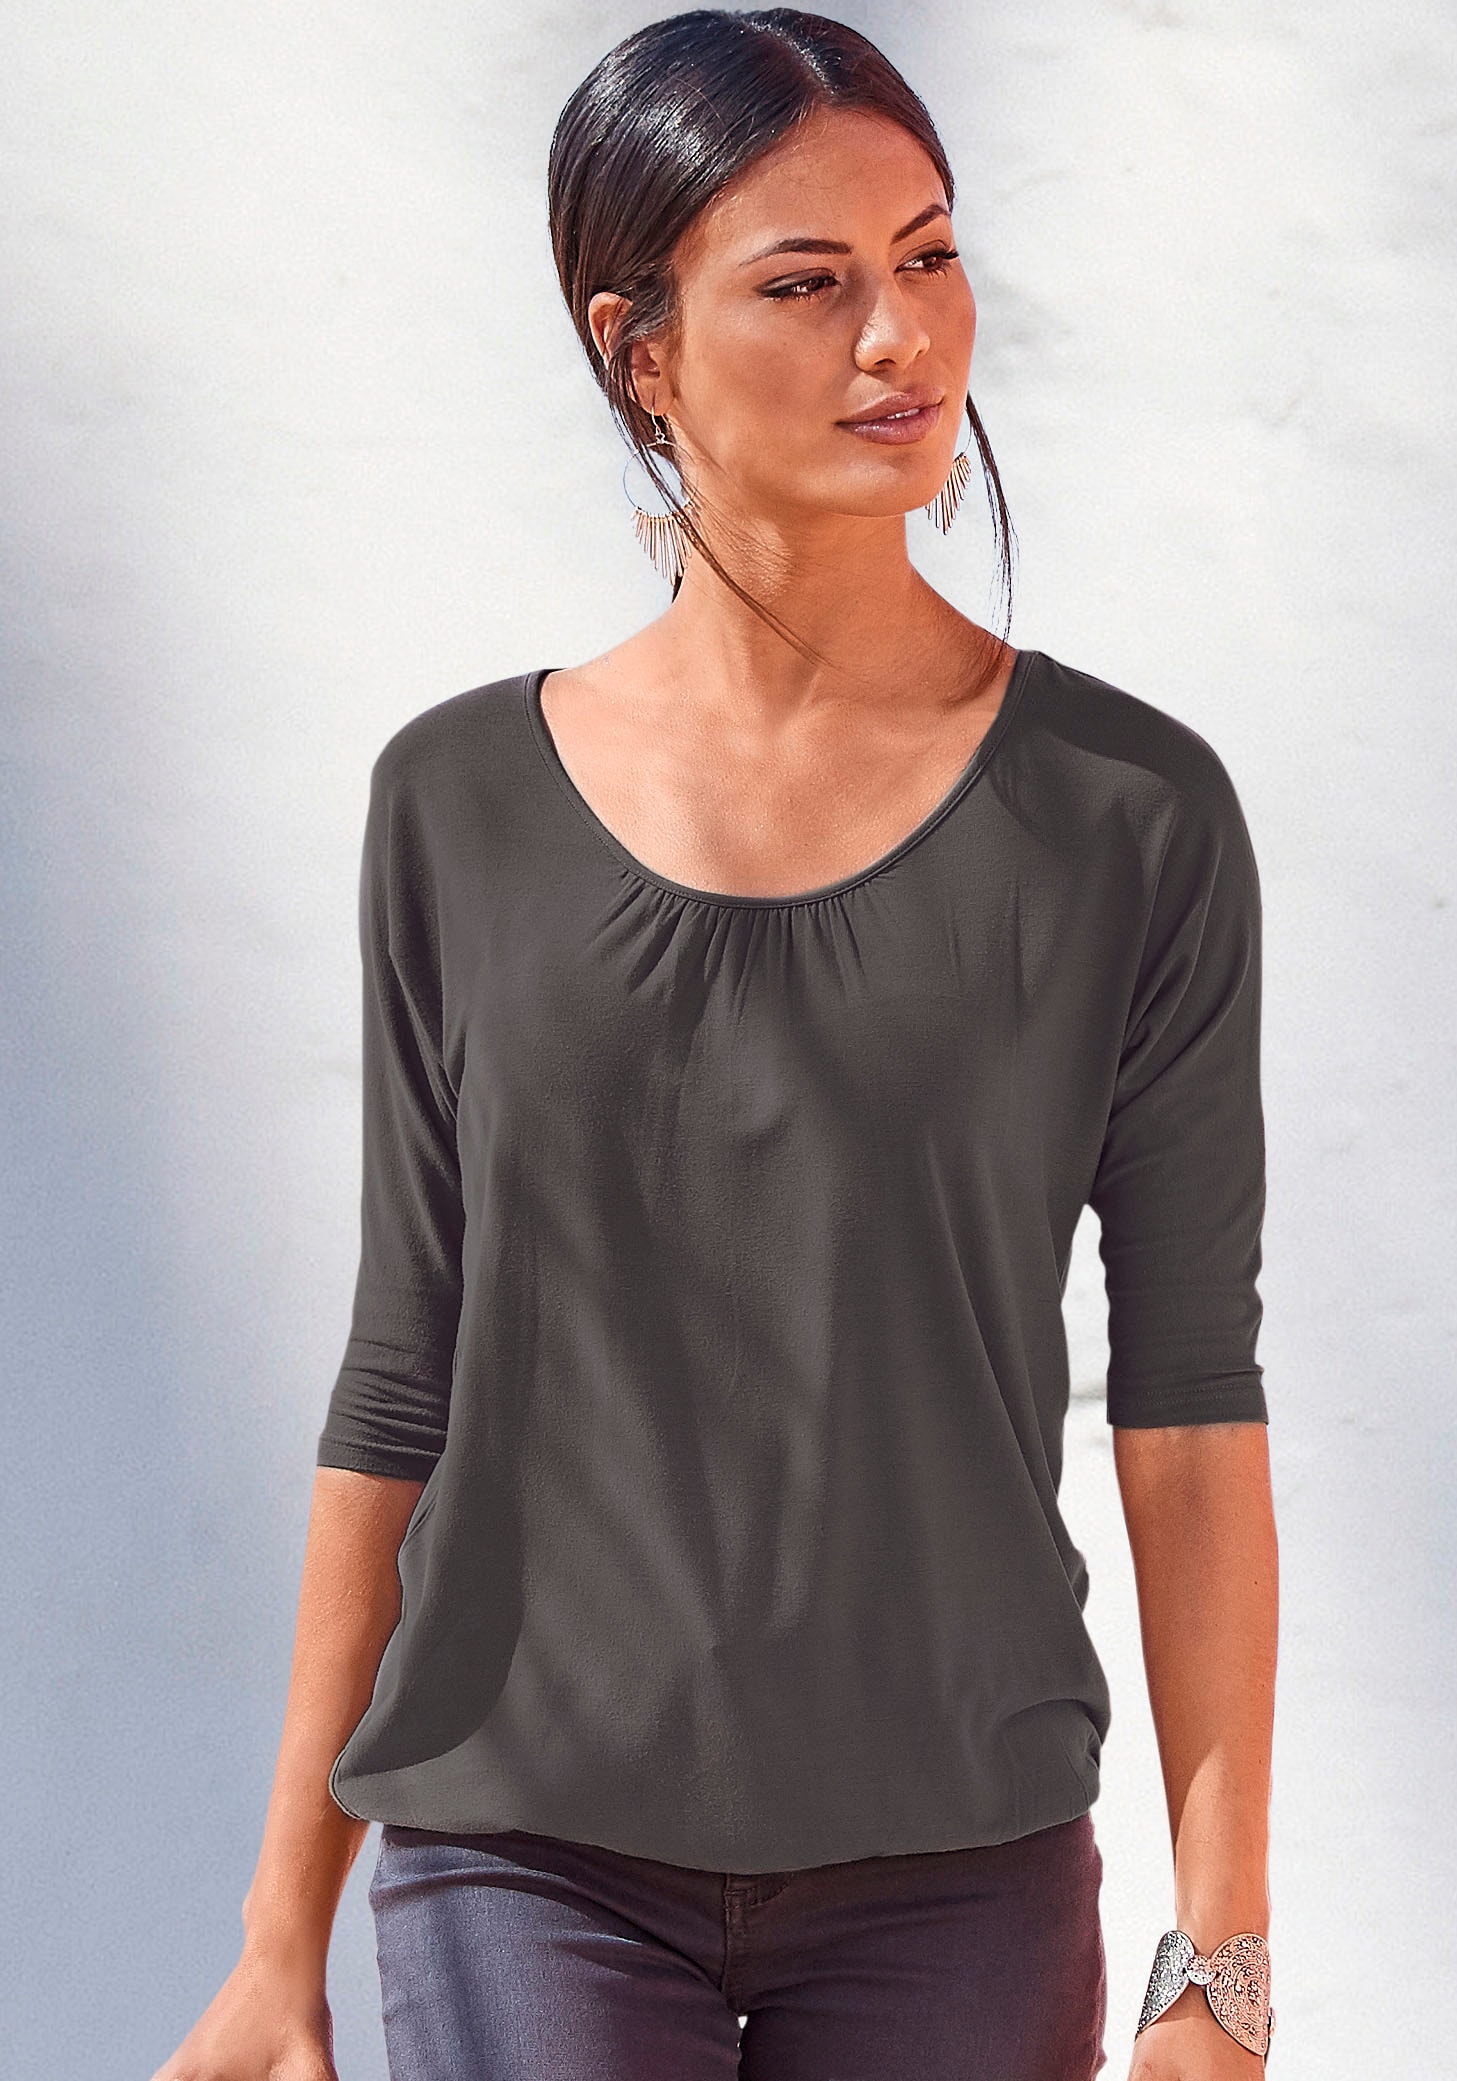 & Ausschnitt LASCANA Bademode, online » 3/4-Arm-Shirt, zarter Unterwäsche Raffung mit kaufen LASCANA am | Lingerie